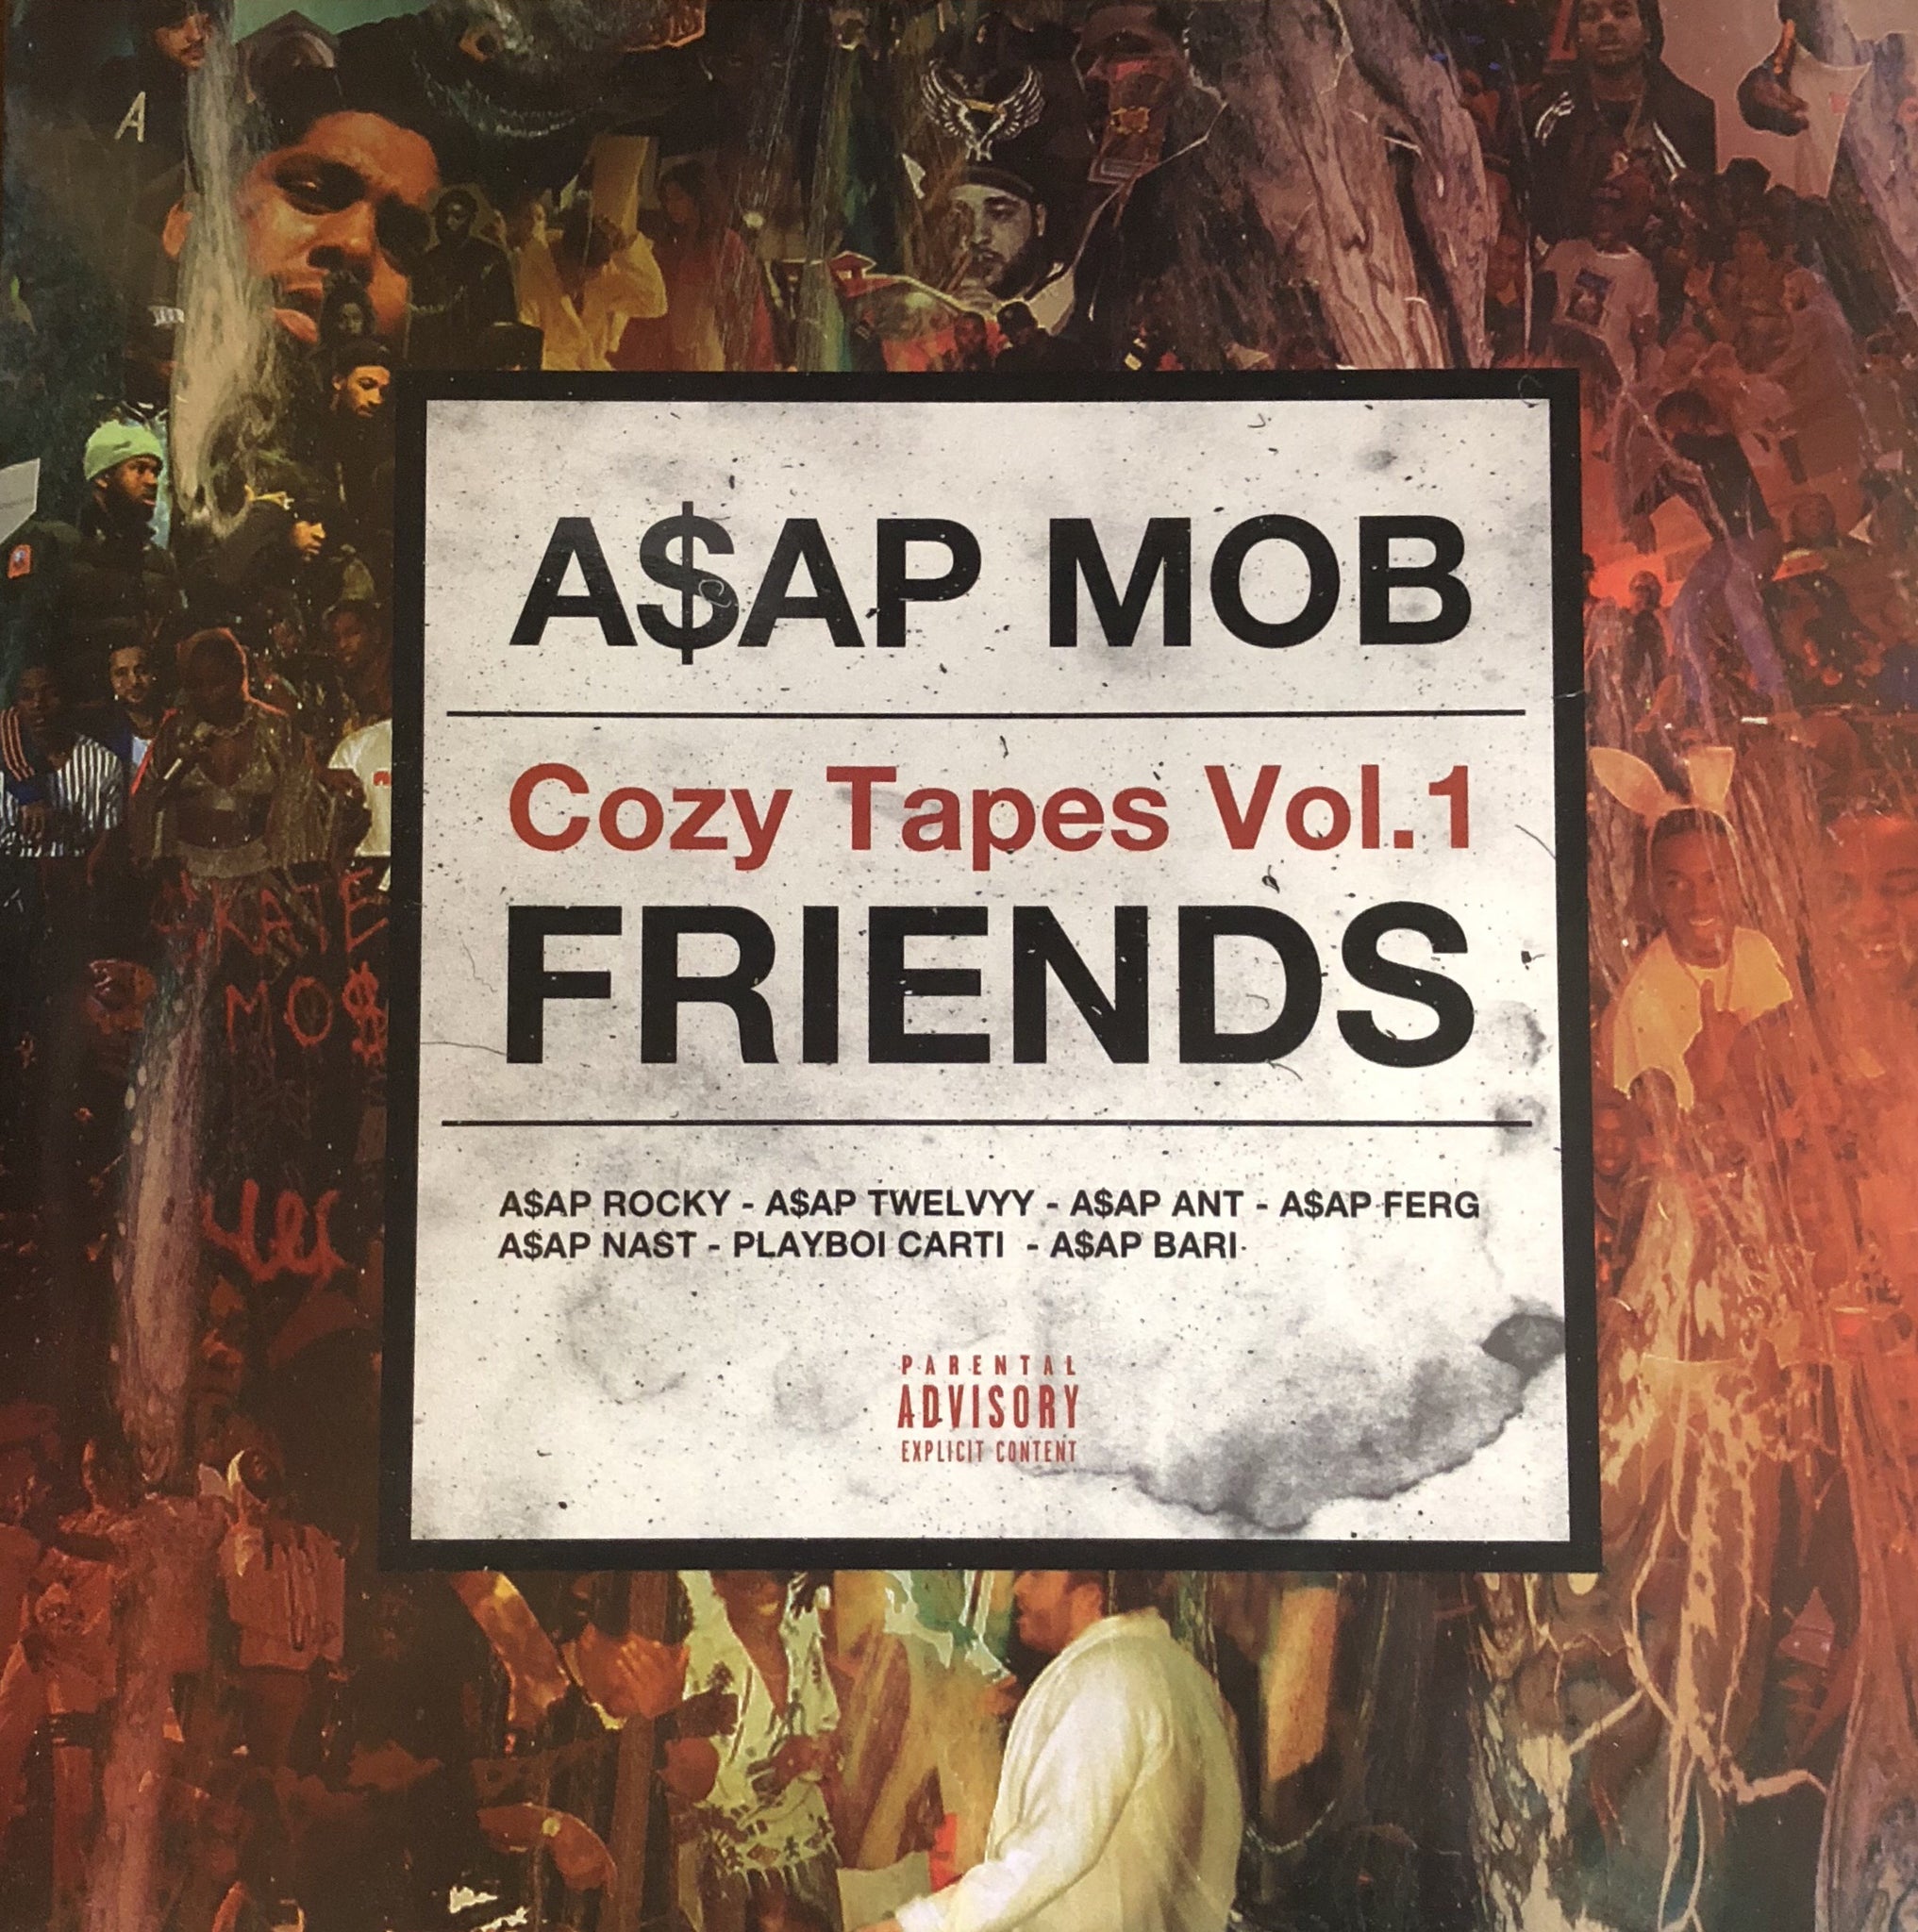 A$AP MOB - Cozy Tapes Vol 1: Friends - New 2 LP Record 2018 Nasty World Europe Import Orange Vinyl - Hip Hop / A$AP Rocky